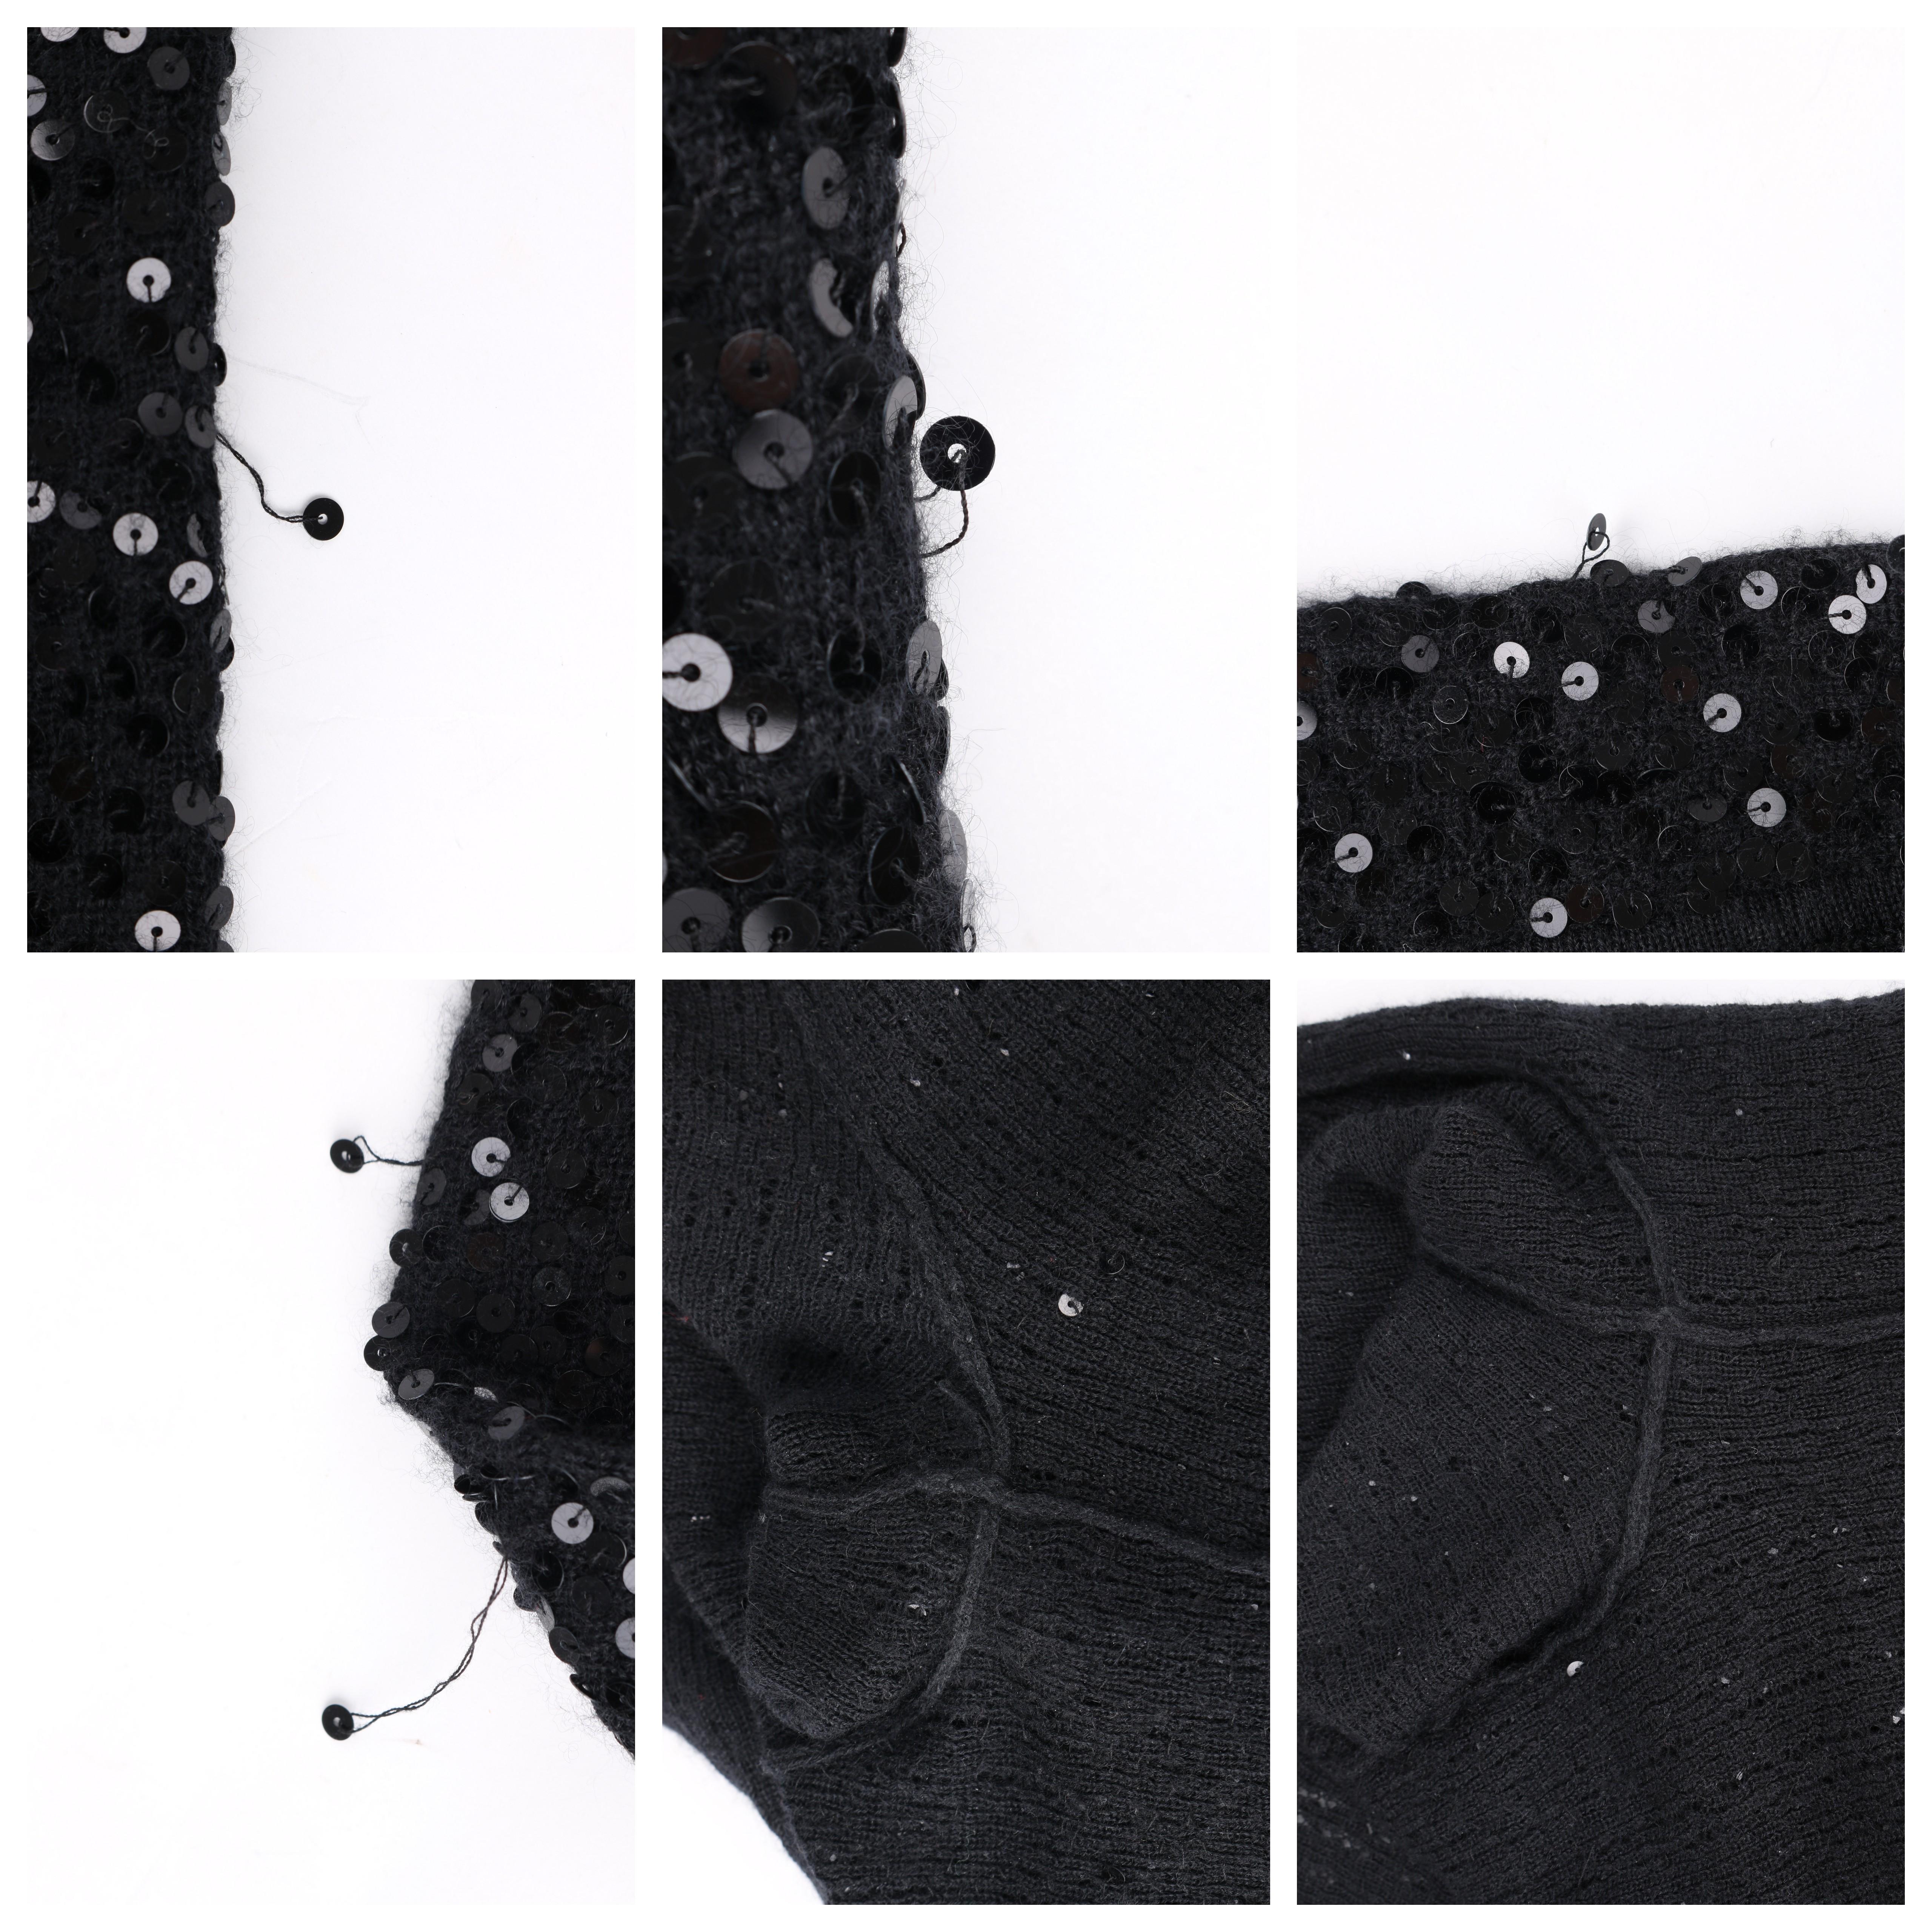 DONNA KARAN c. 1990’s Black Sequin Silk Cashmere Cowl Neck Knit Sweater Top 1